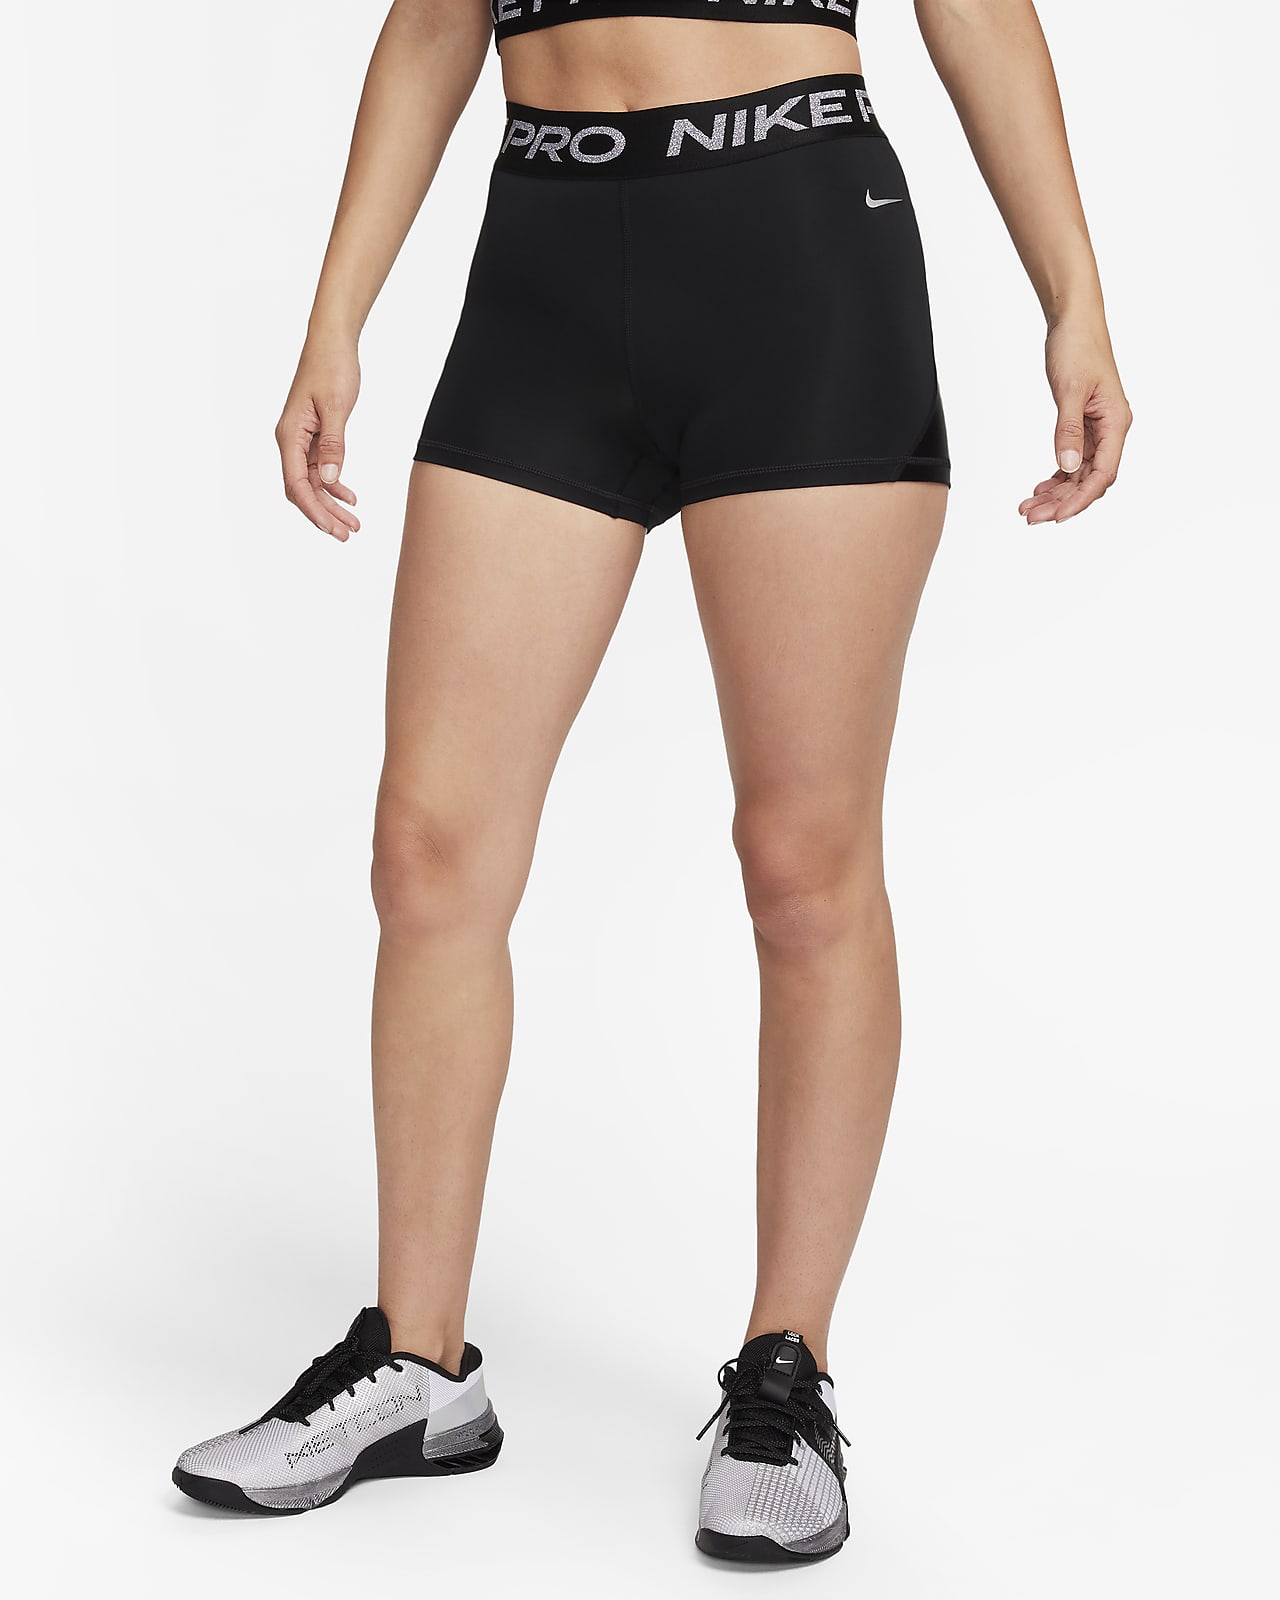  Nike Women's Pro 5 Training Short (Black/White, Small) :  Clothing, Shoes & Jewelry